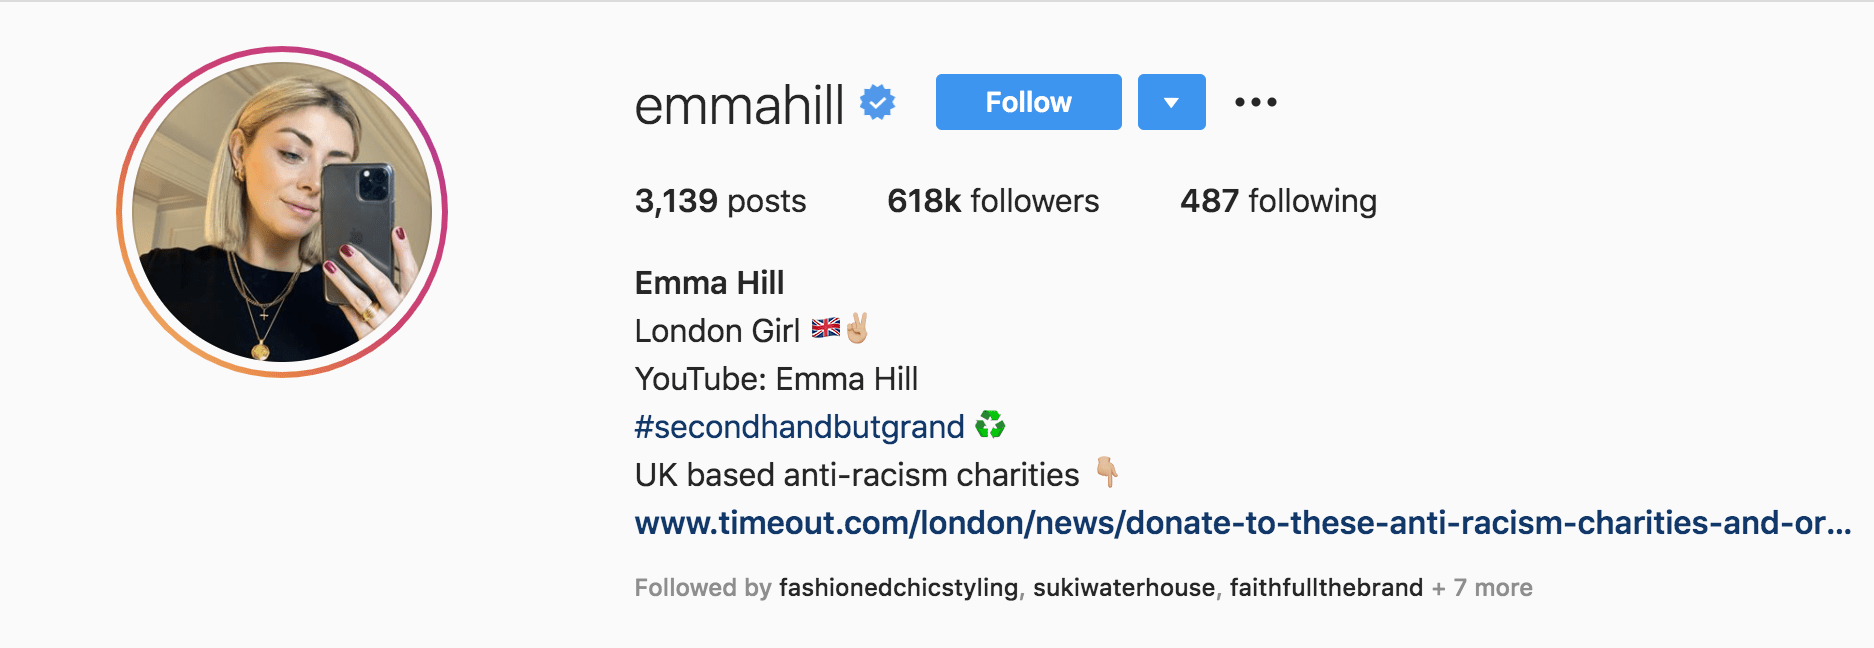 Top Fashion Influencers - Emma Hill 